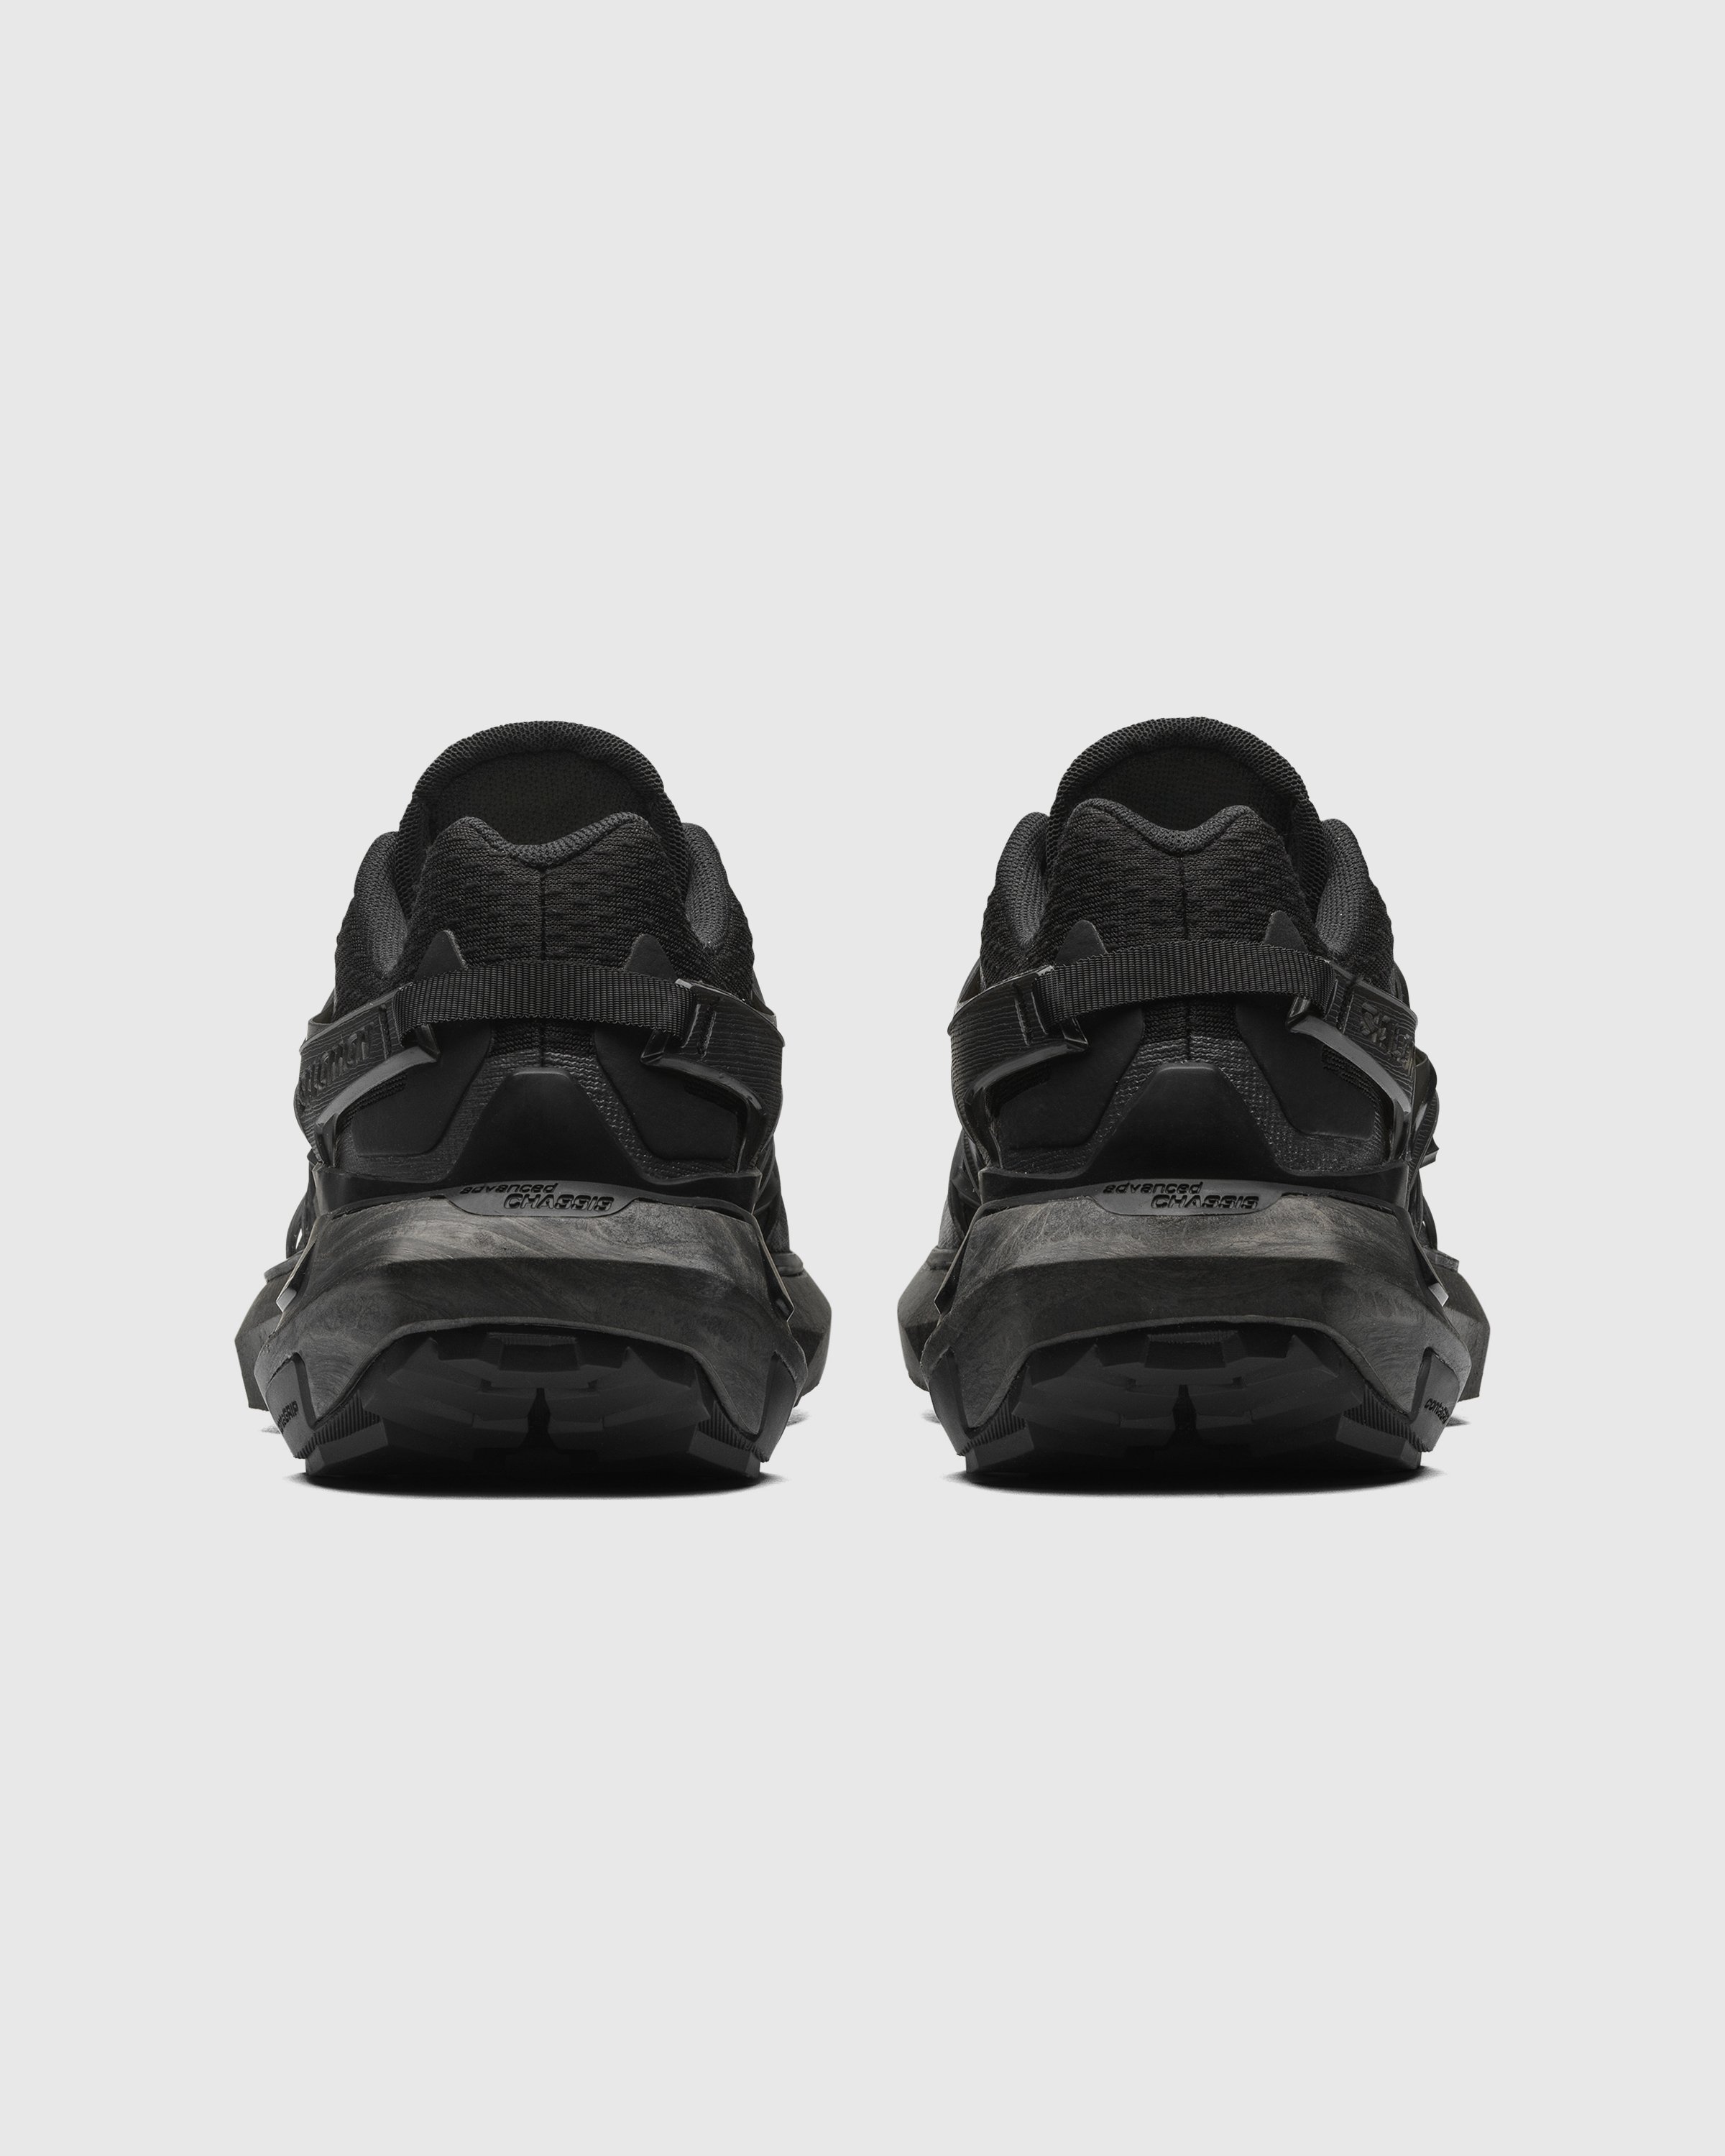 Salomon - XT PU.RE ADVANCED Black/Black/Pha - Footwear - Black - Image 3